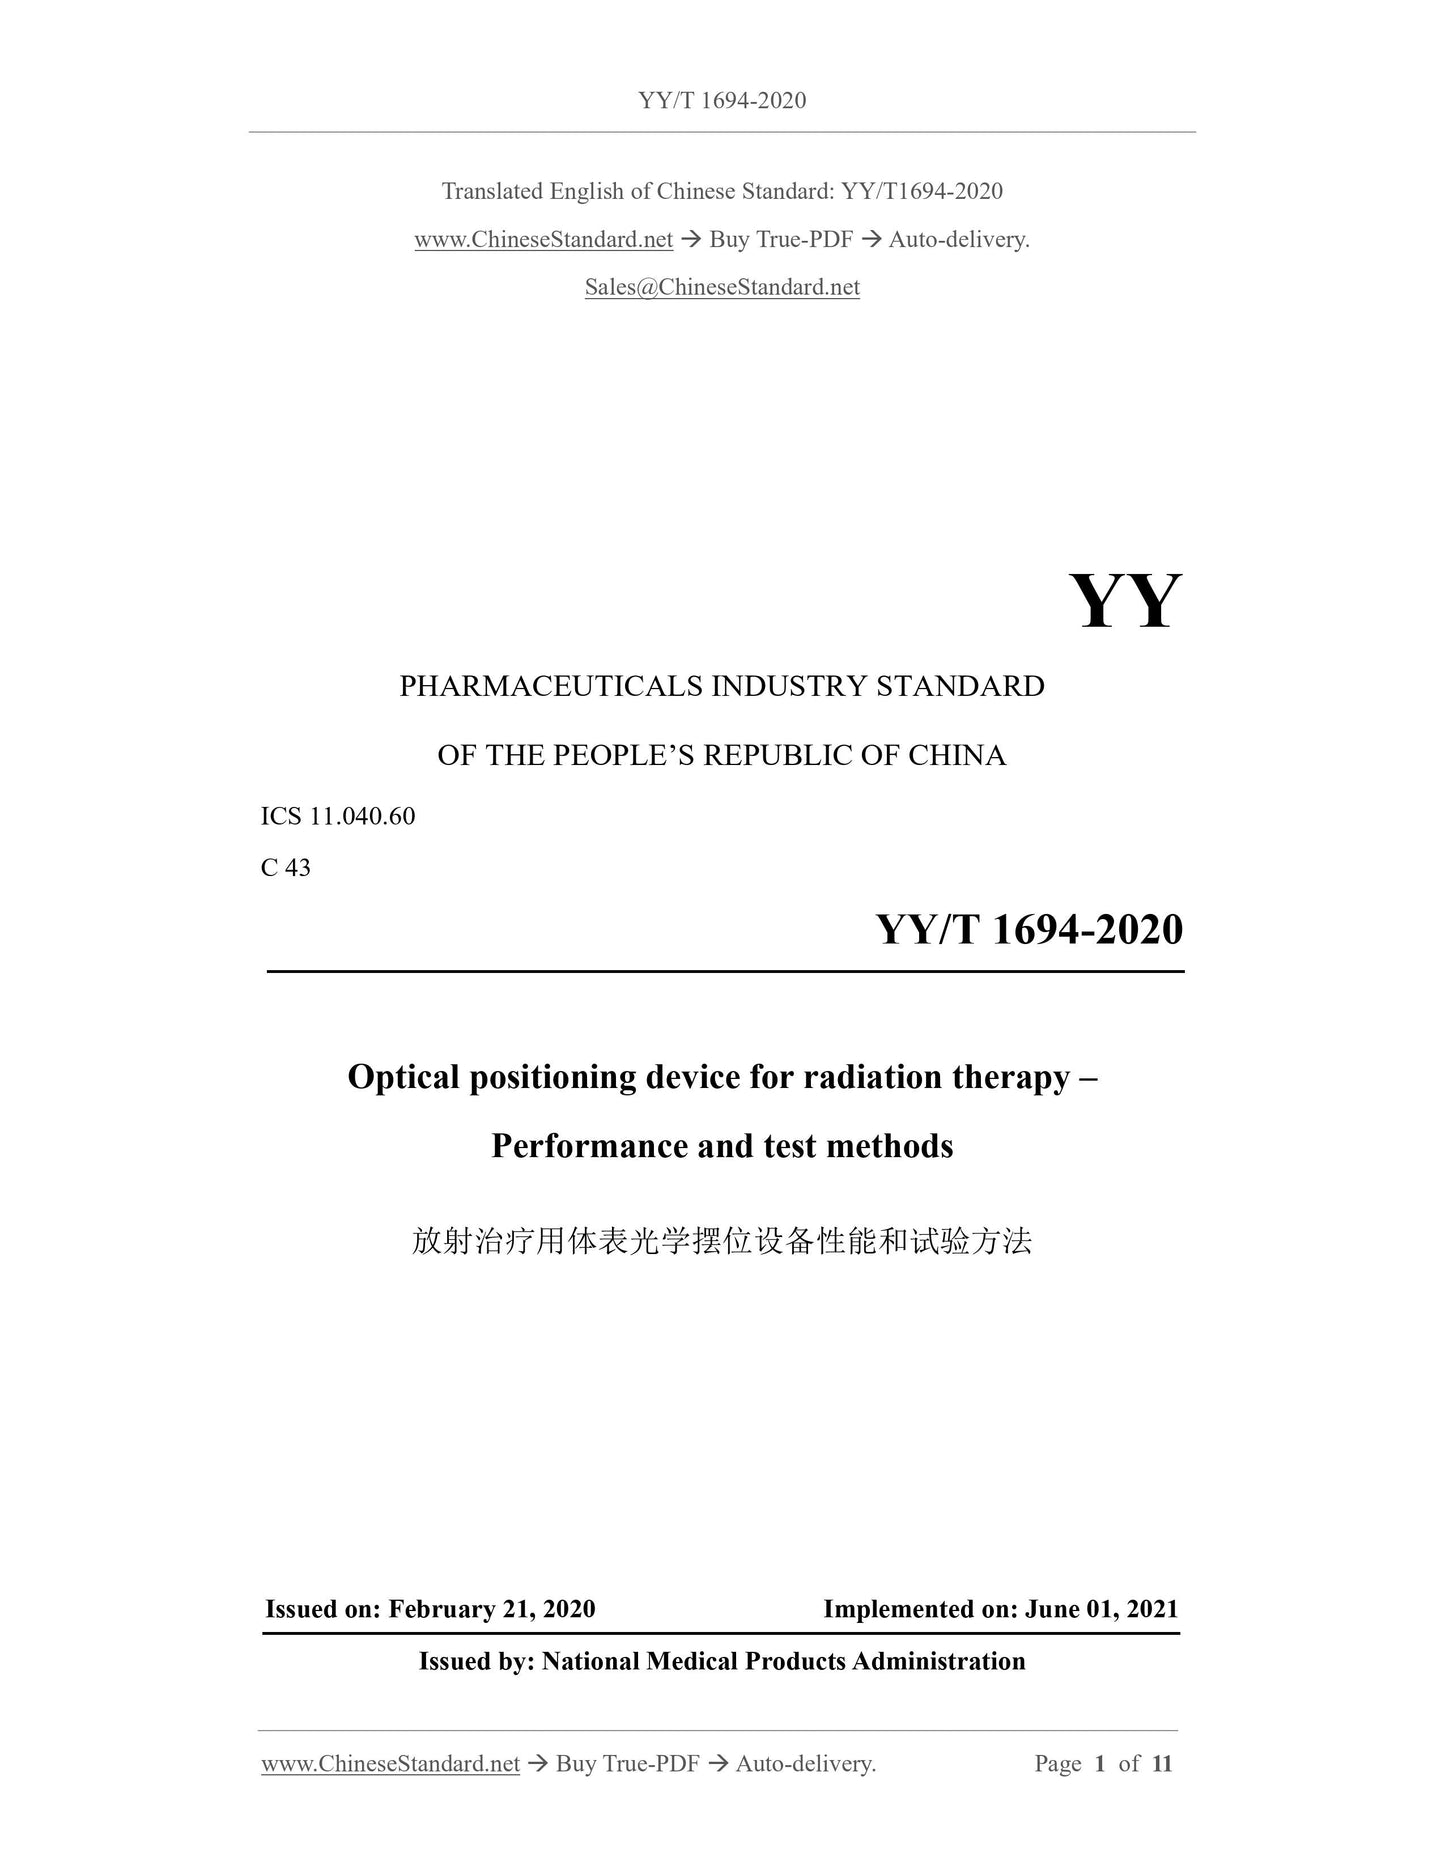 YY/T 1694-2020 Page 1